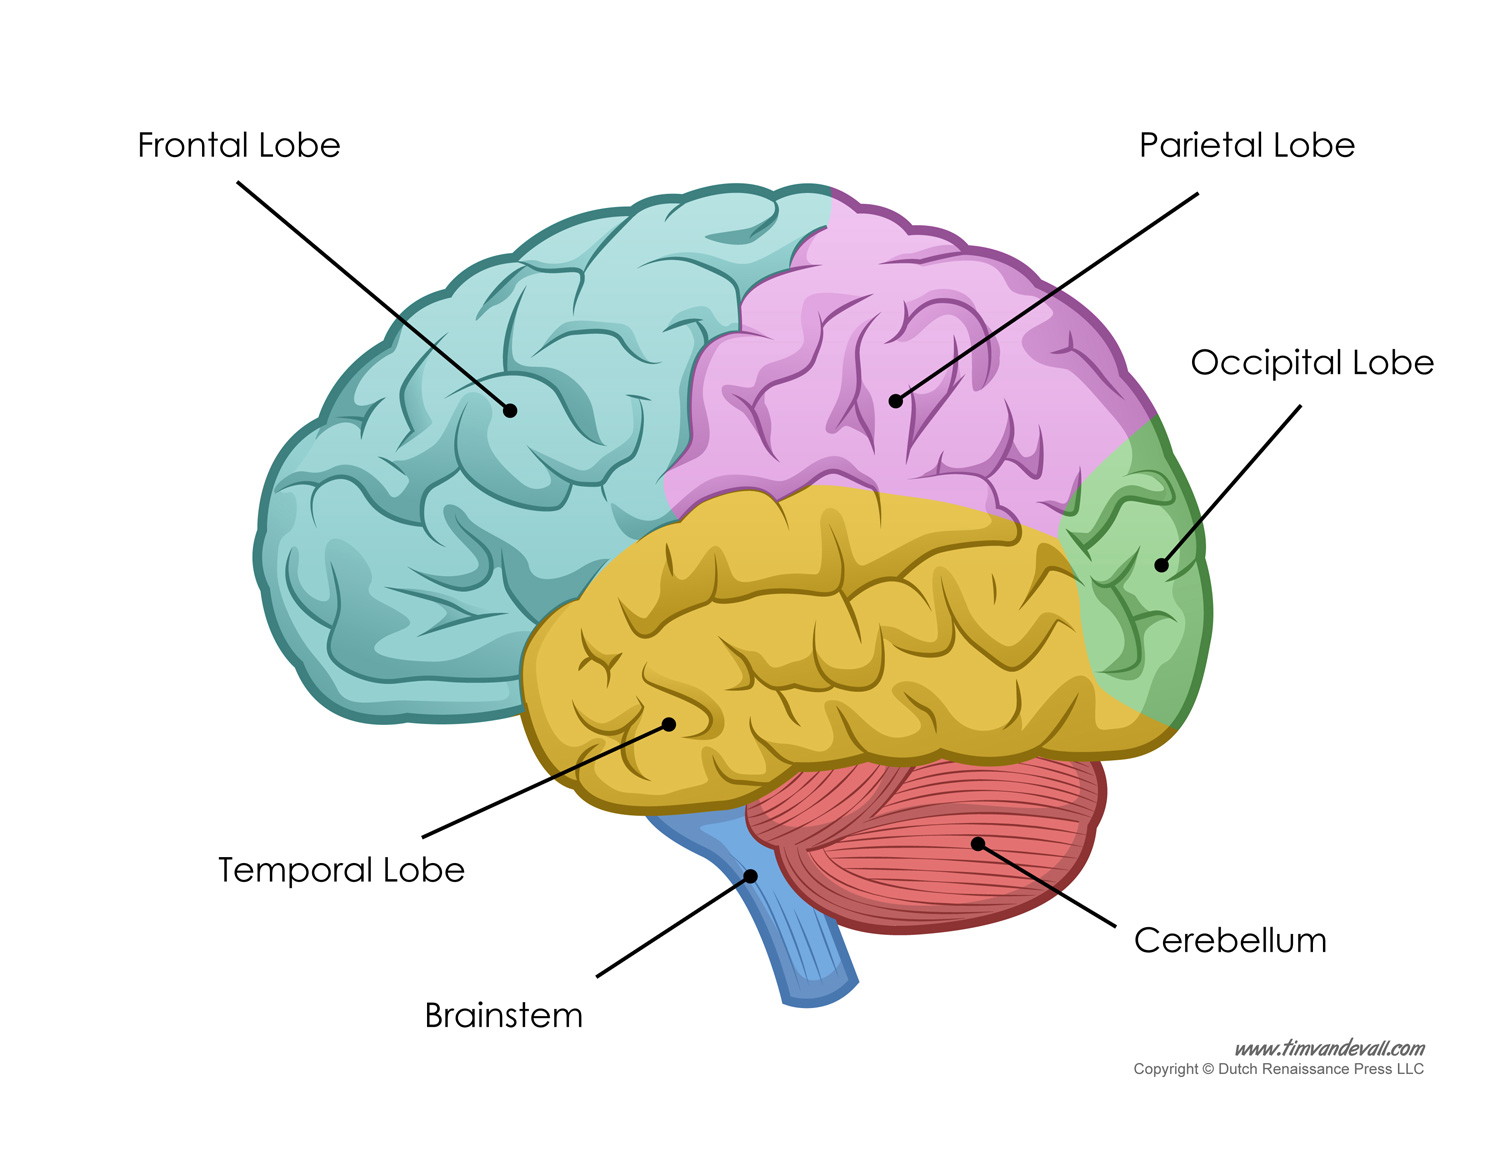 Free Brain Diagram, Download Free Brain Diagram png images, Free